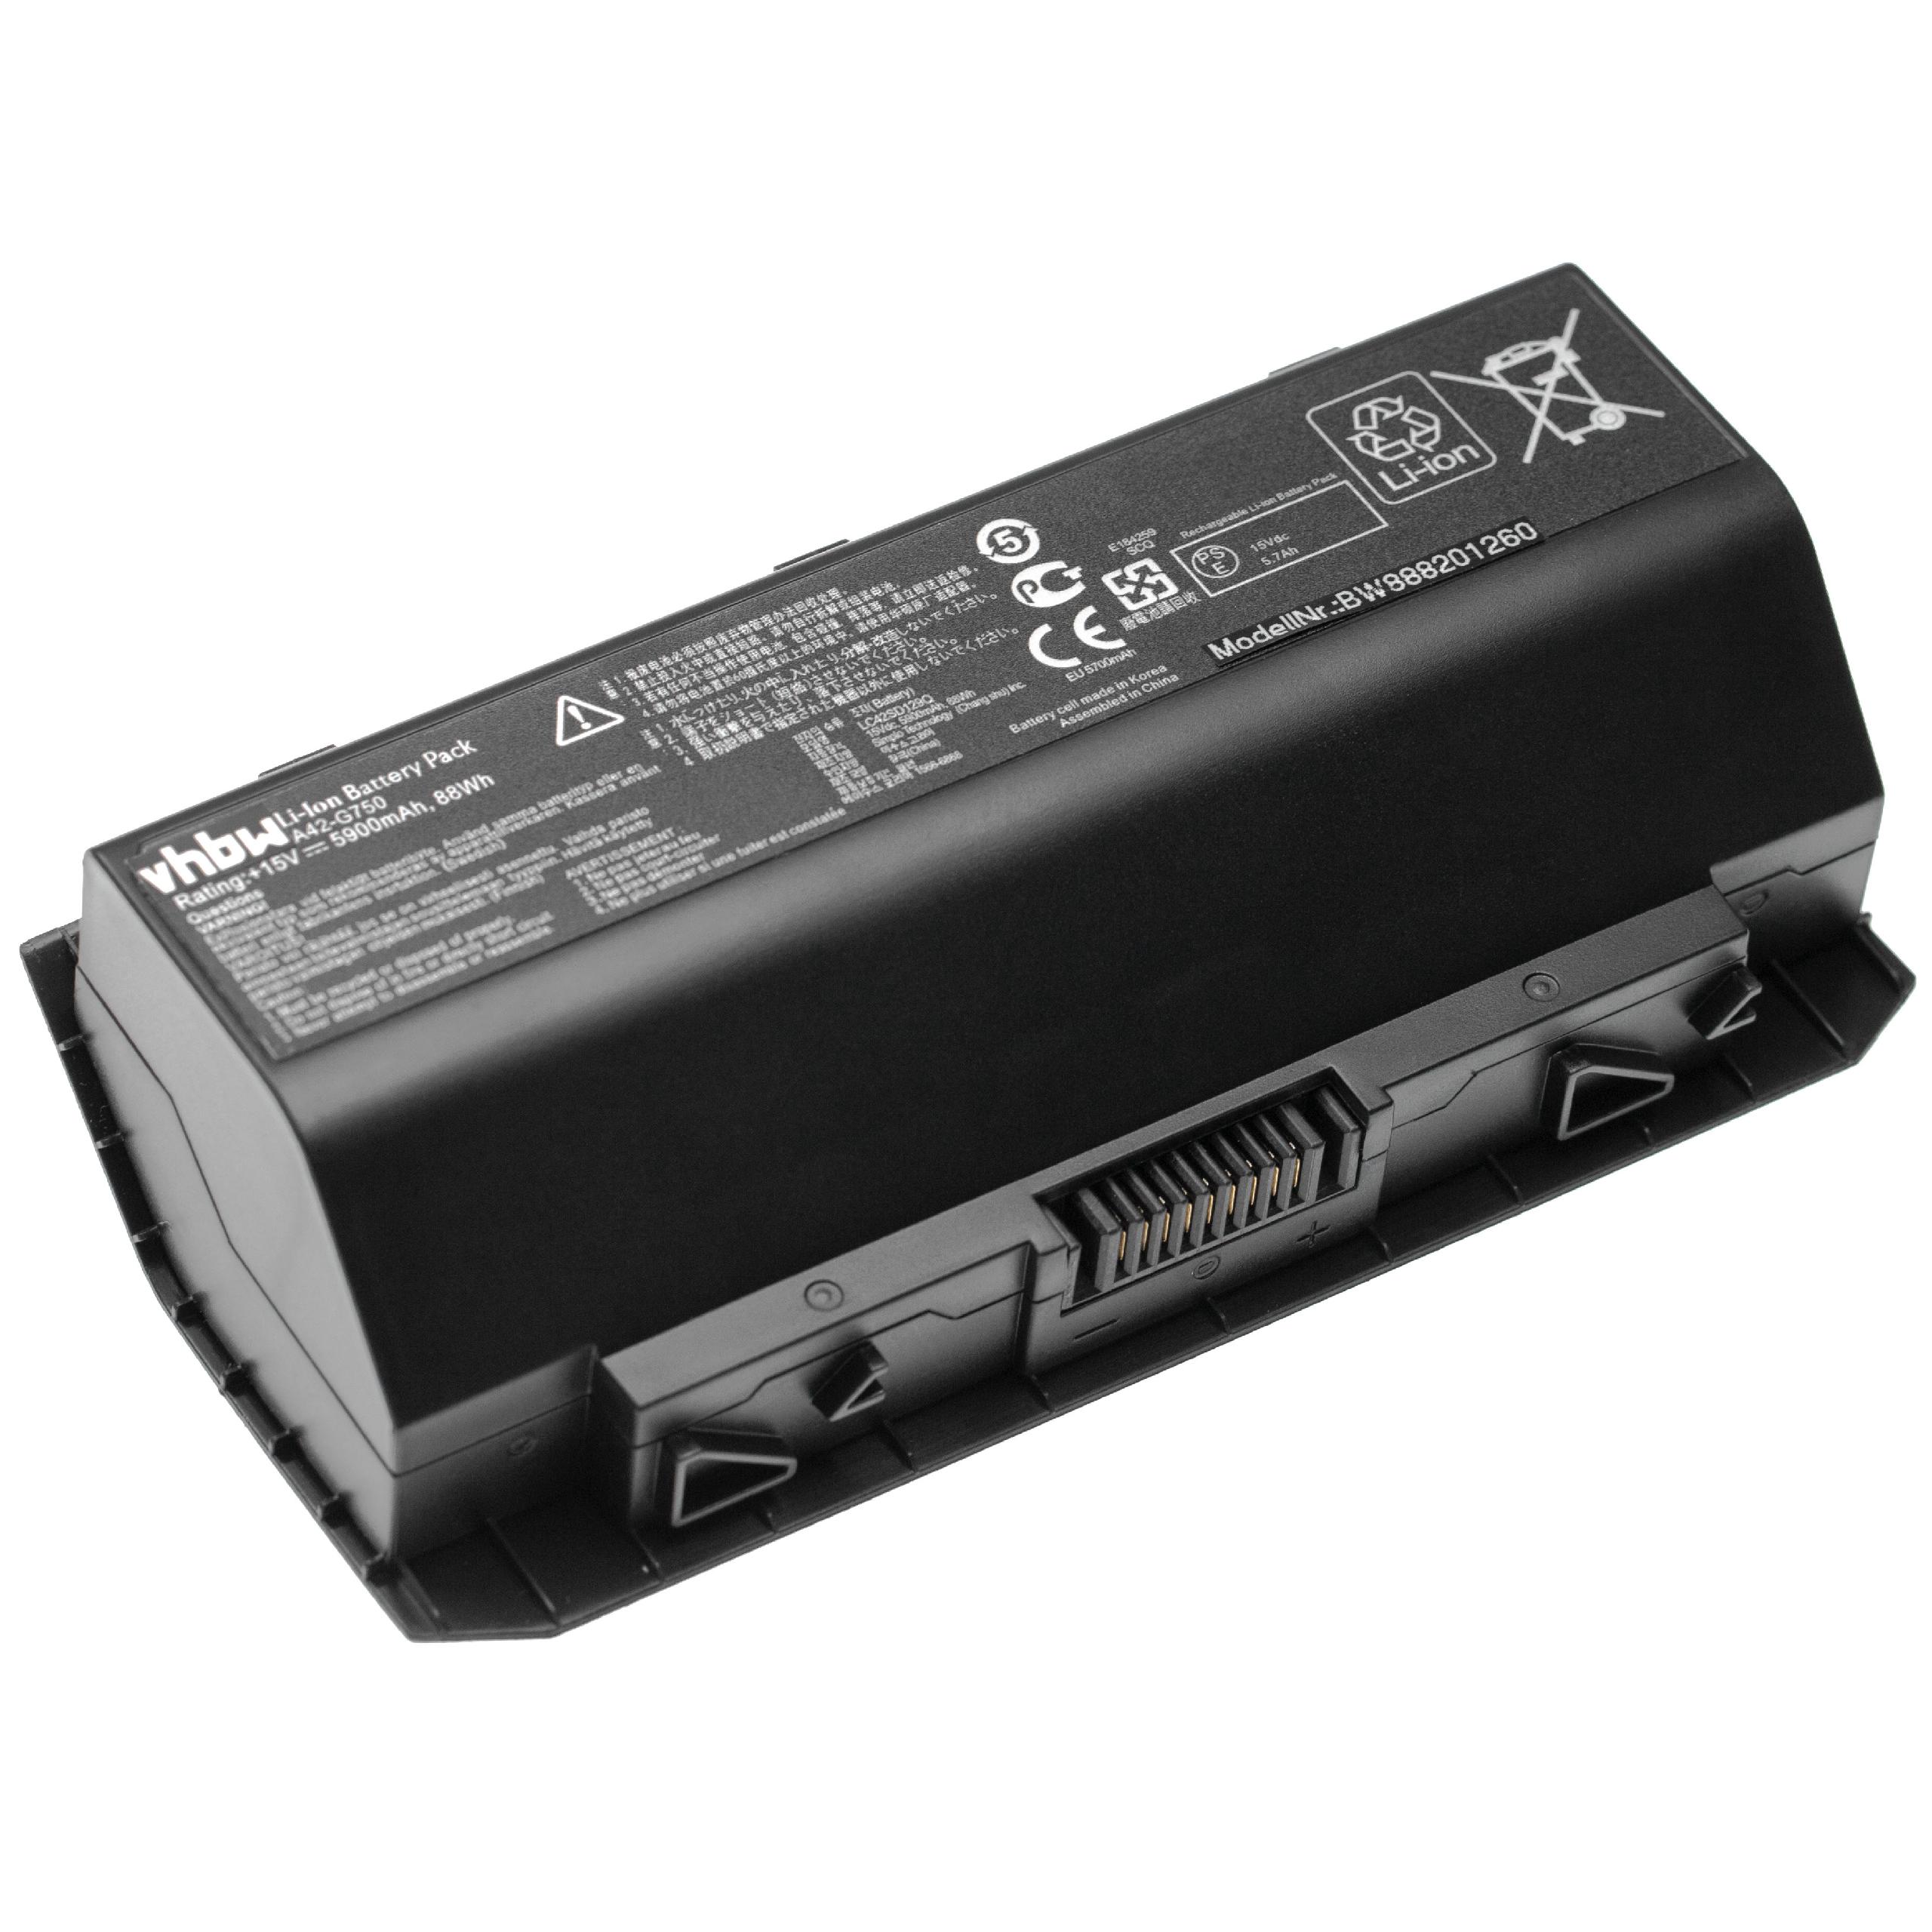 Batería reemplaza Asus A42-G750 para notebook Asus - 5900 mAh 15 V Li-poli negro